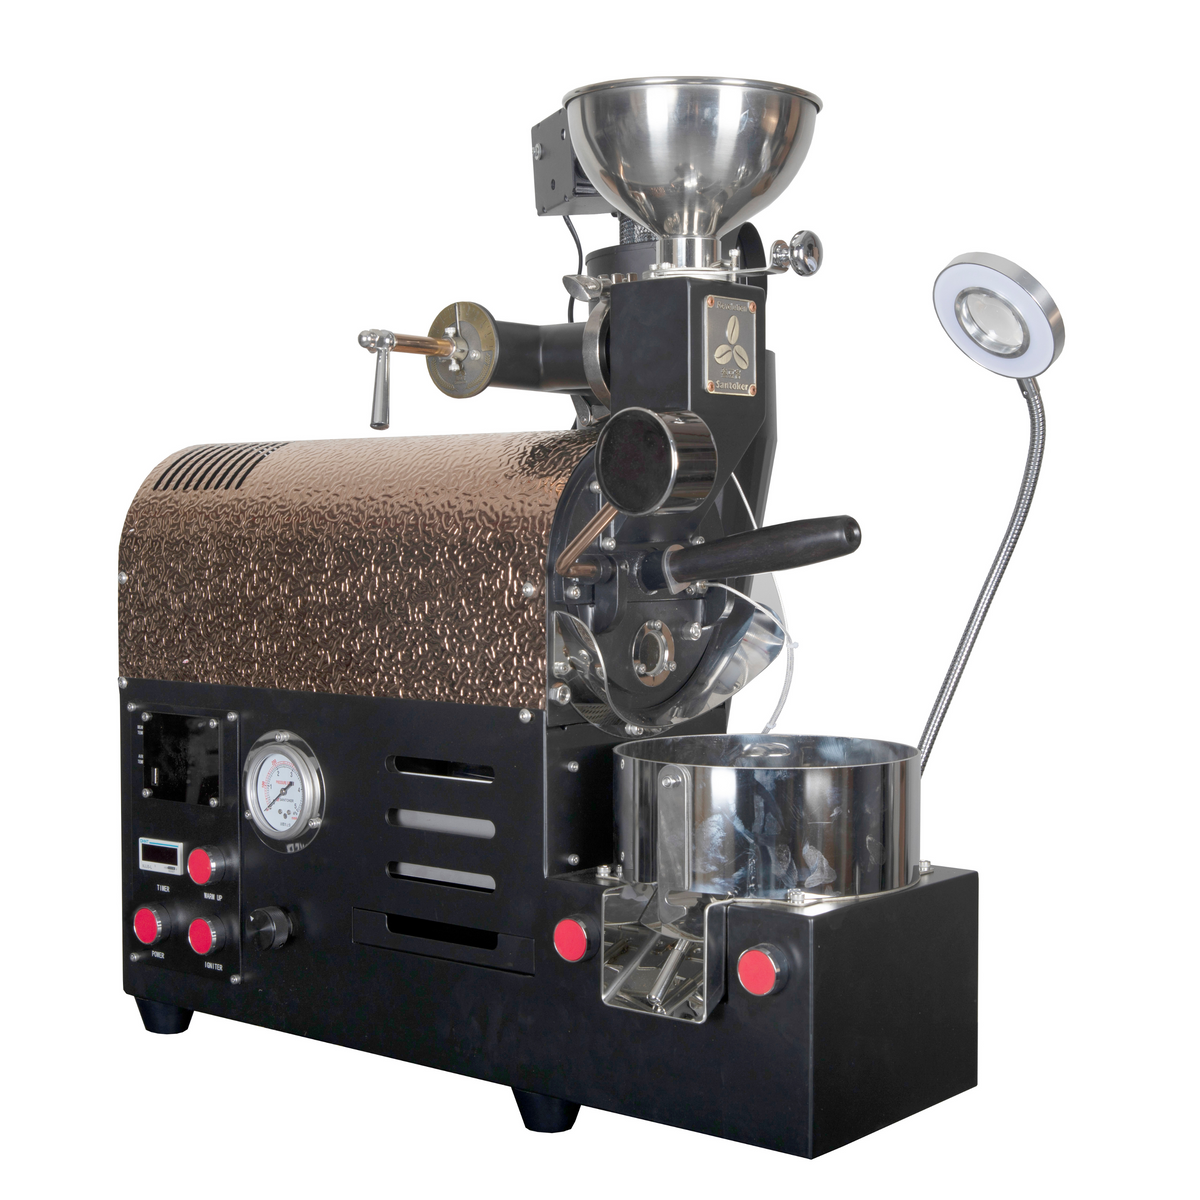 Santoker R300 咖啡烘焙機 - 500g/批